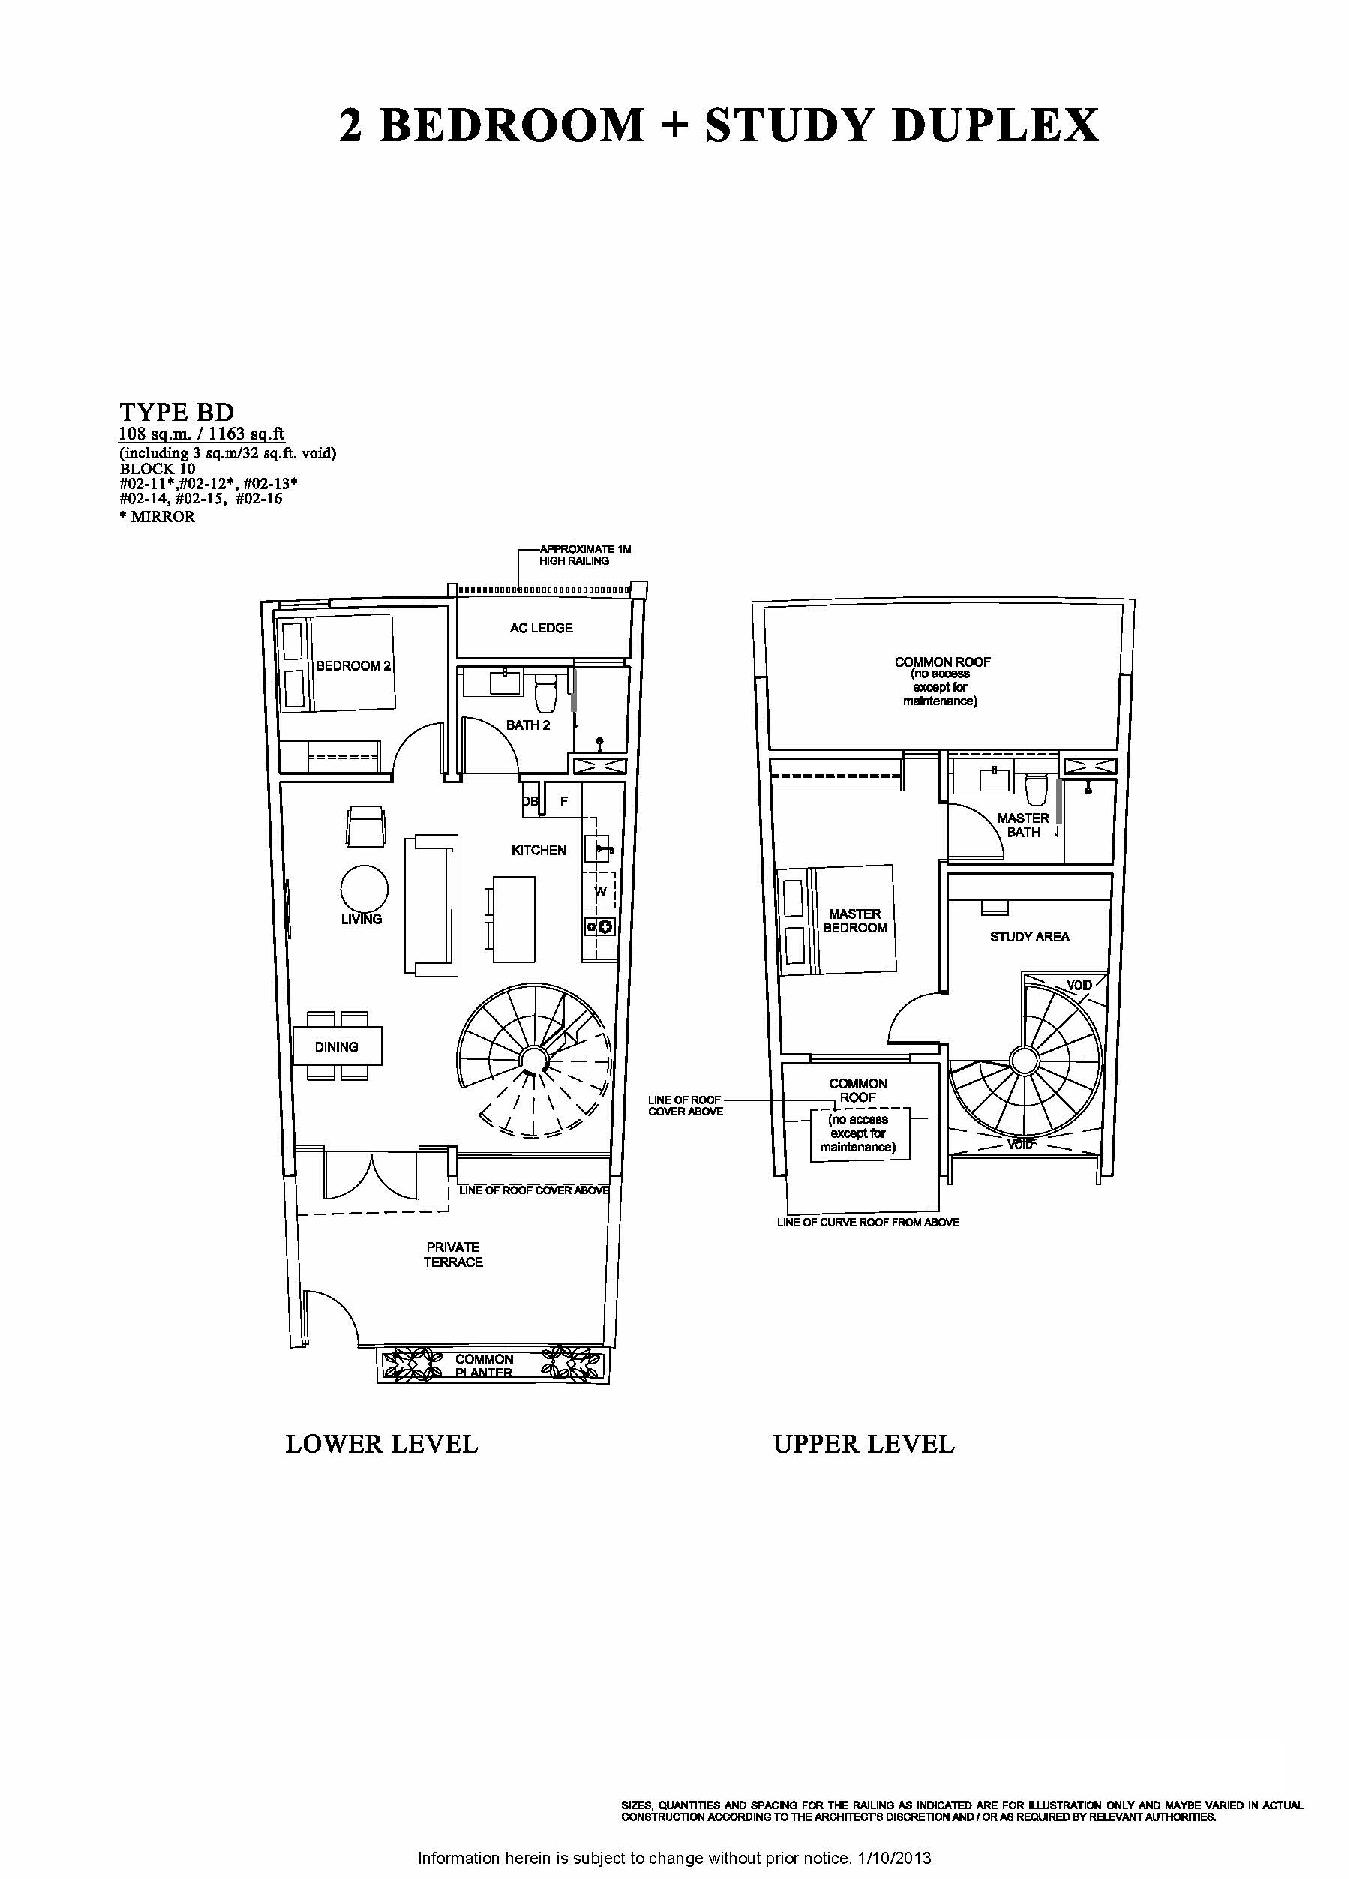 The Venue Residences 2 Bedroom + Study Duplex Floor Plan Type BD